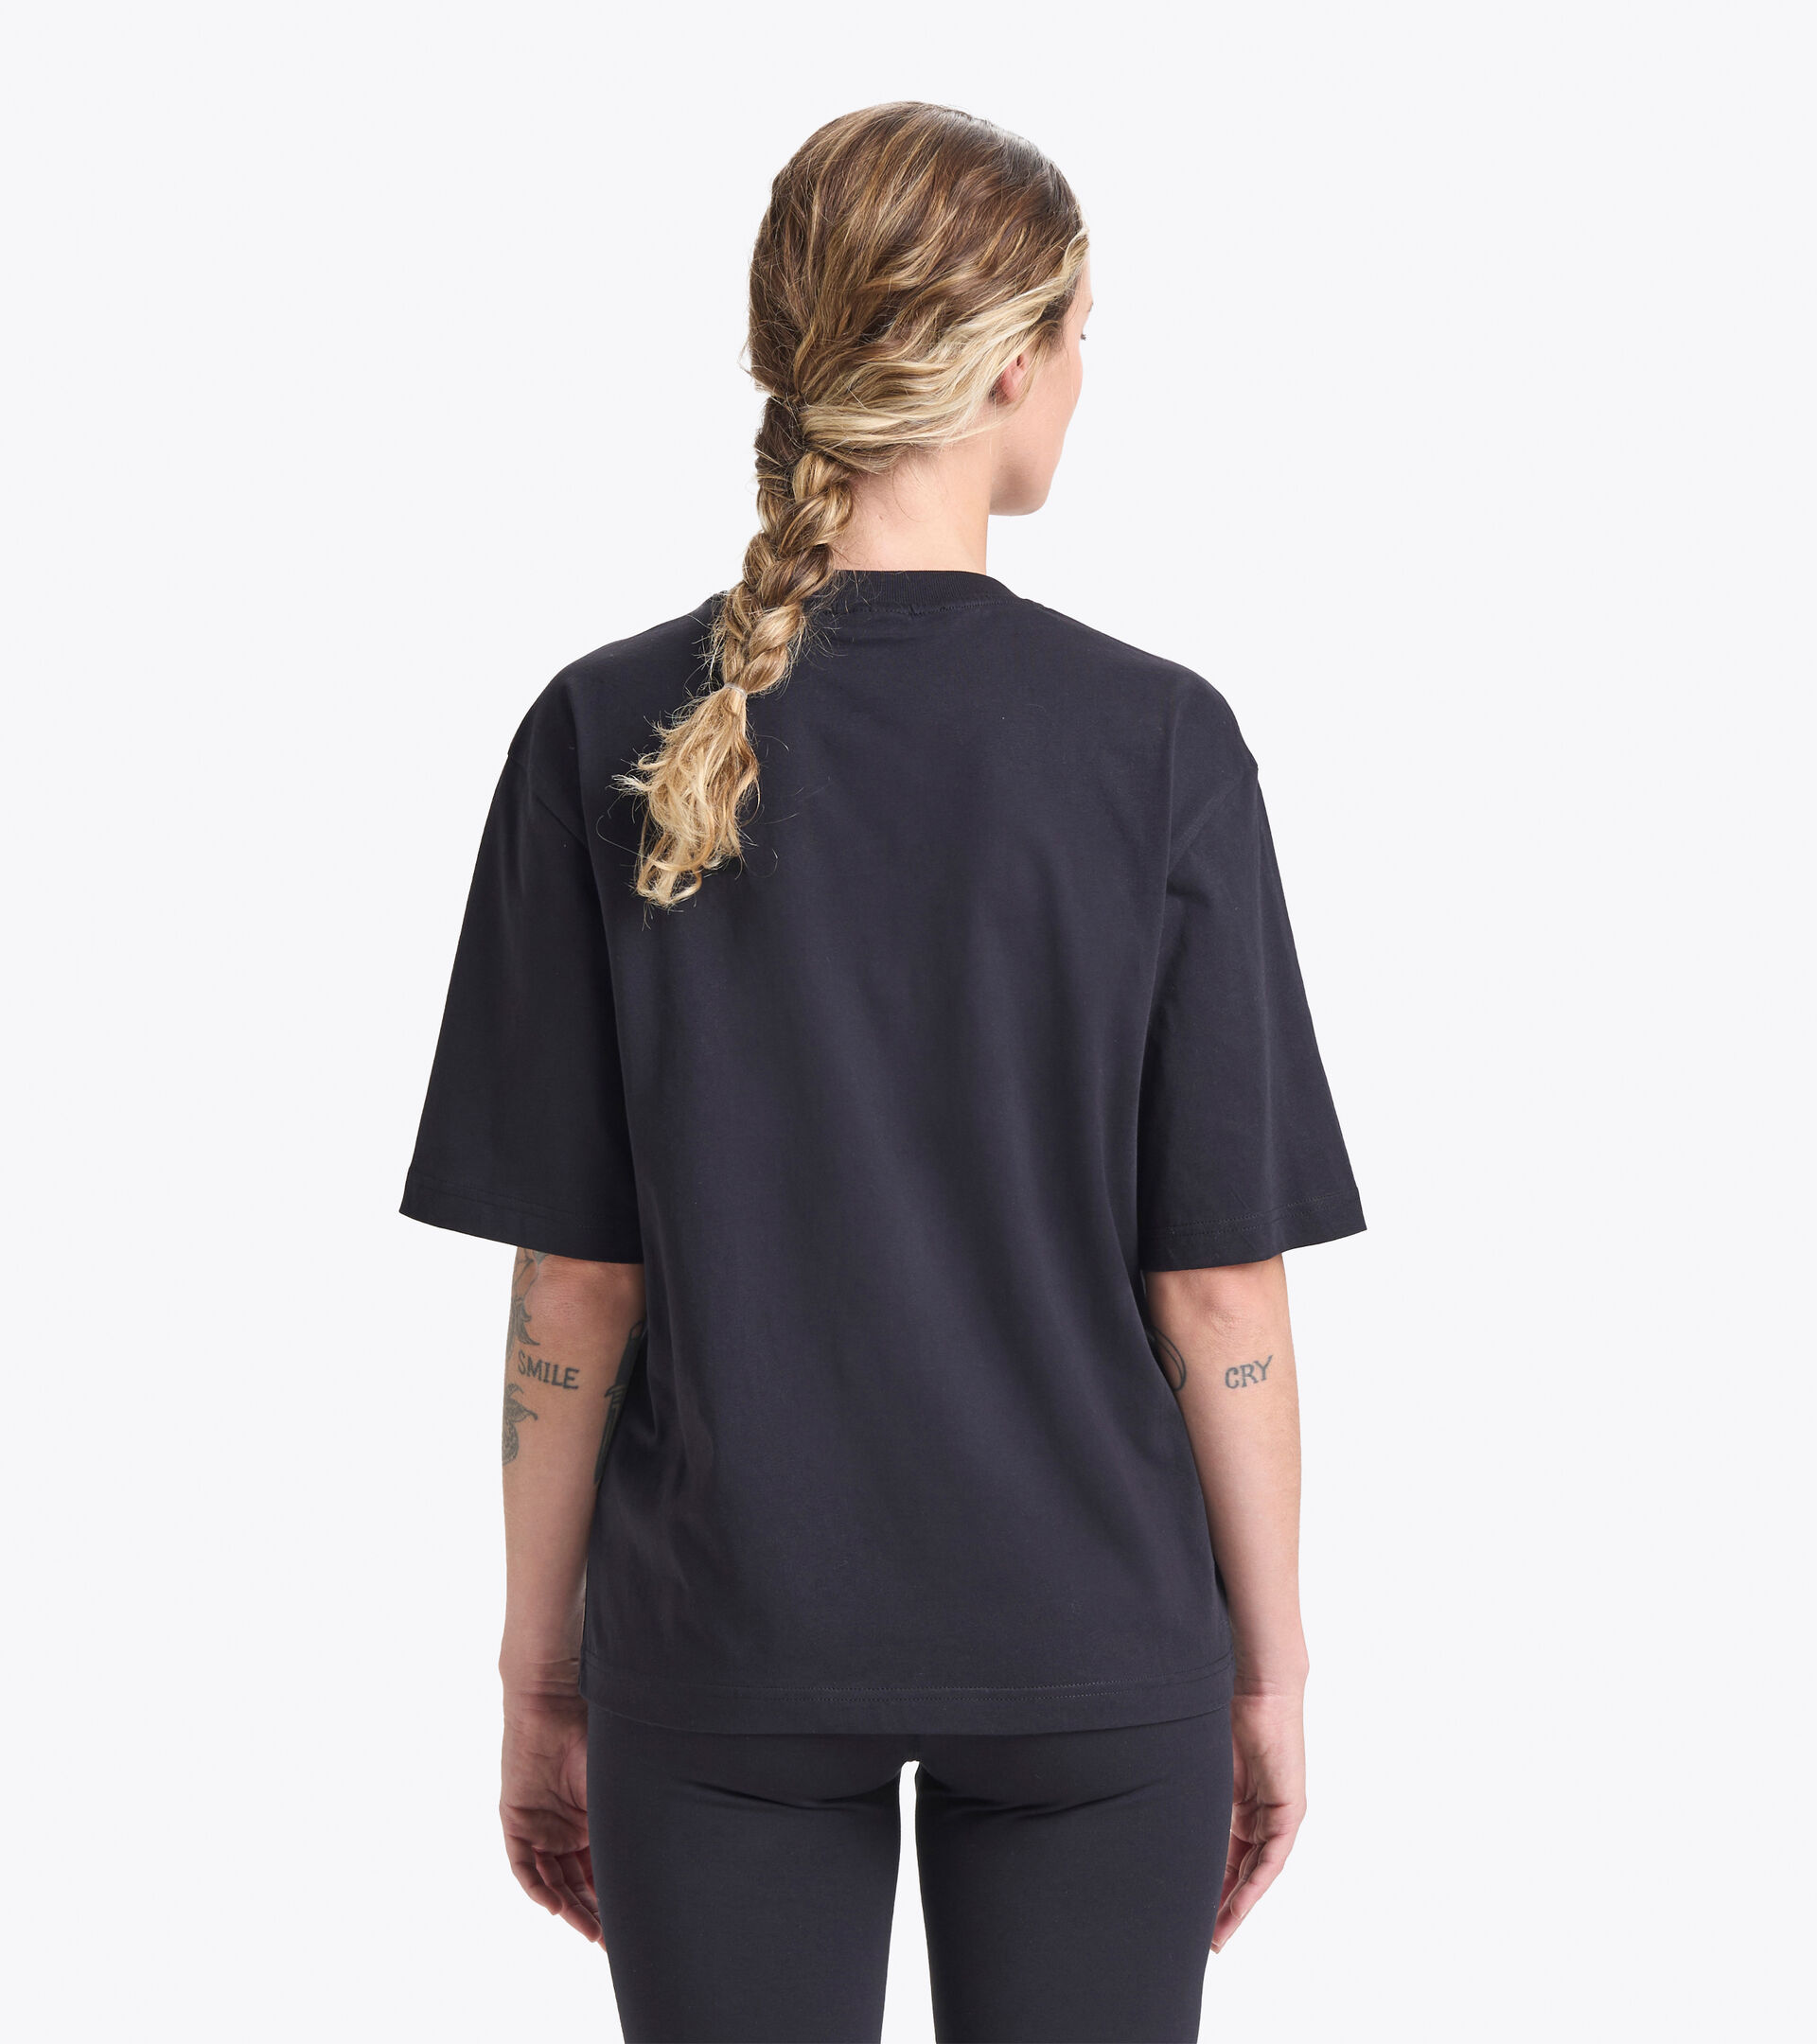 T-shirt en coton - Femme L. T-SHIRT SS SPW LOGO NOIR - Diadora